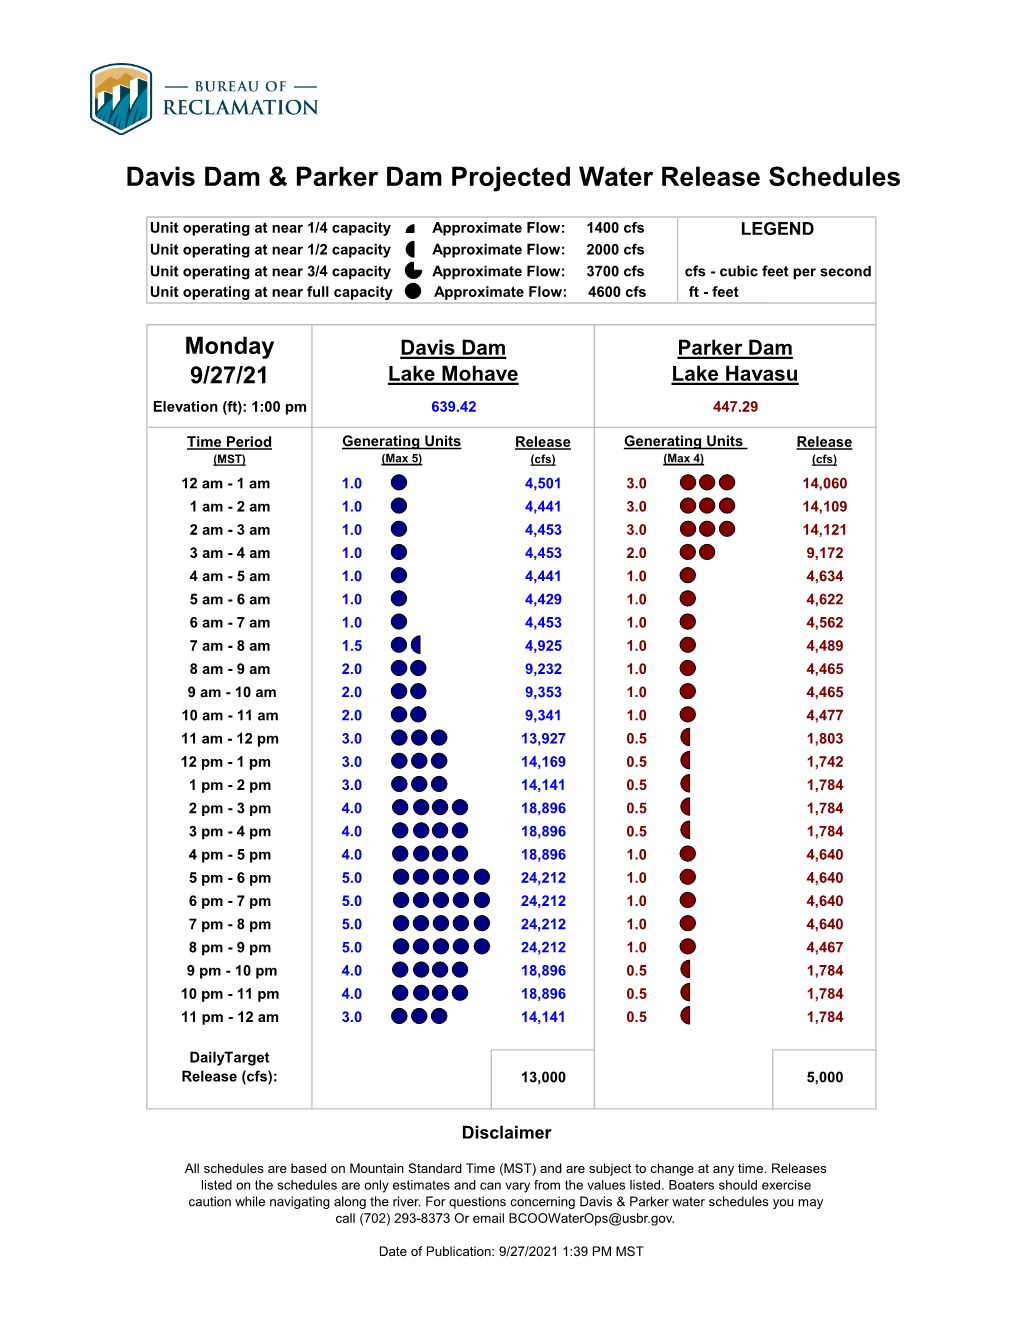 Davis & Parker Dam Projected Water Release Schedules DocsLib